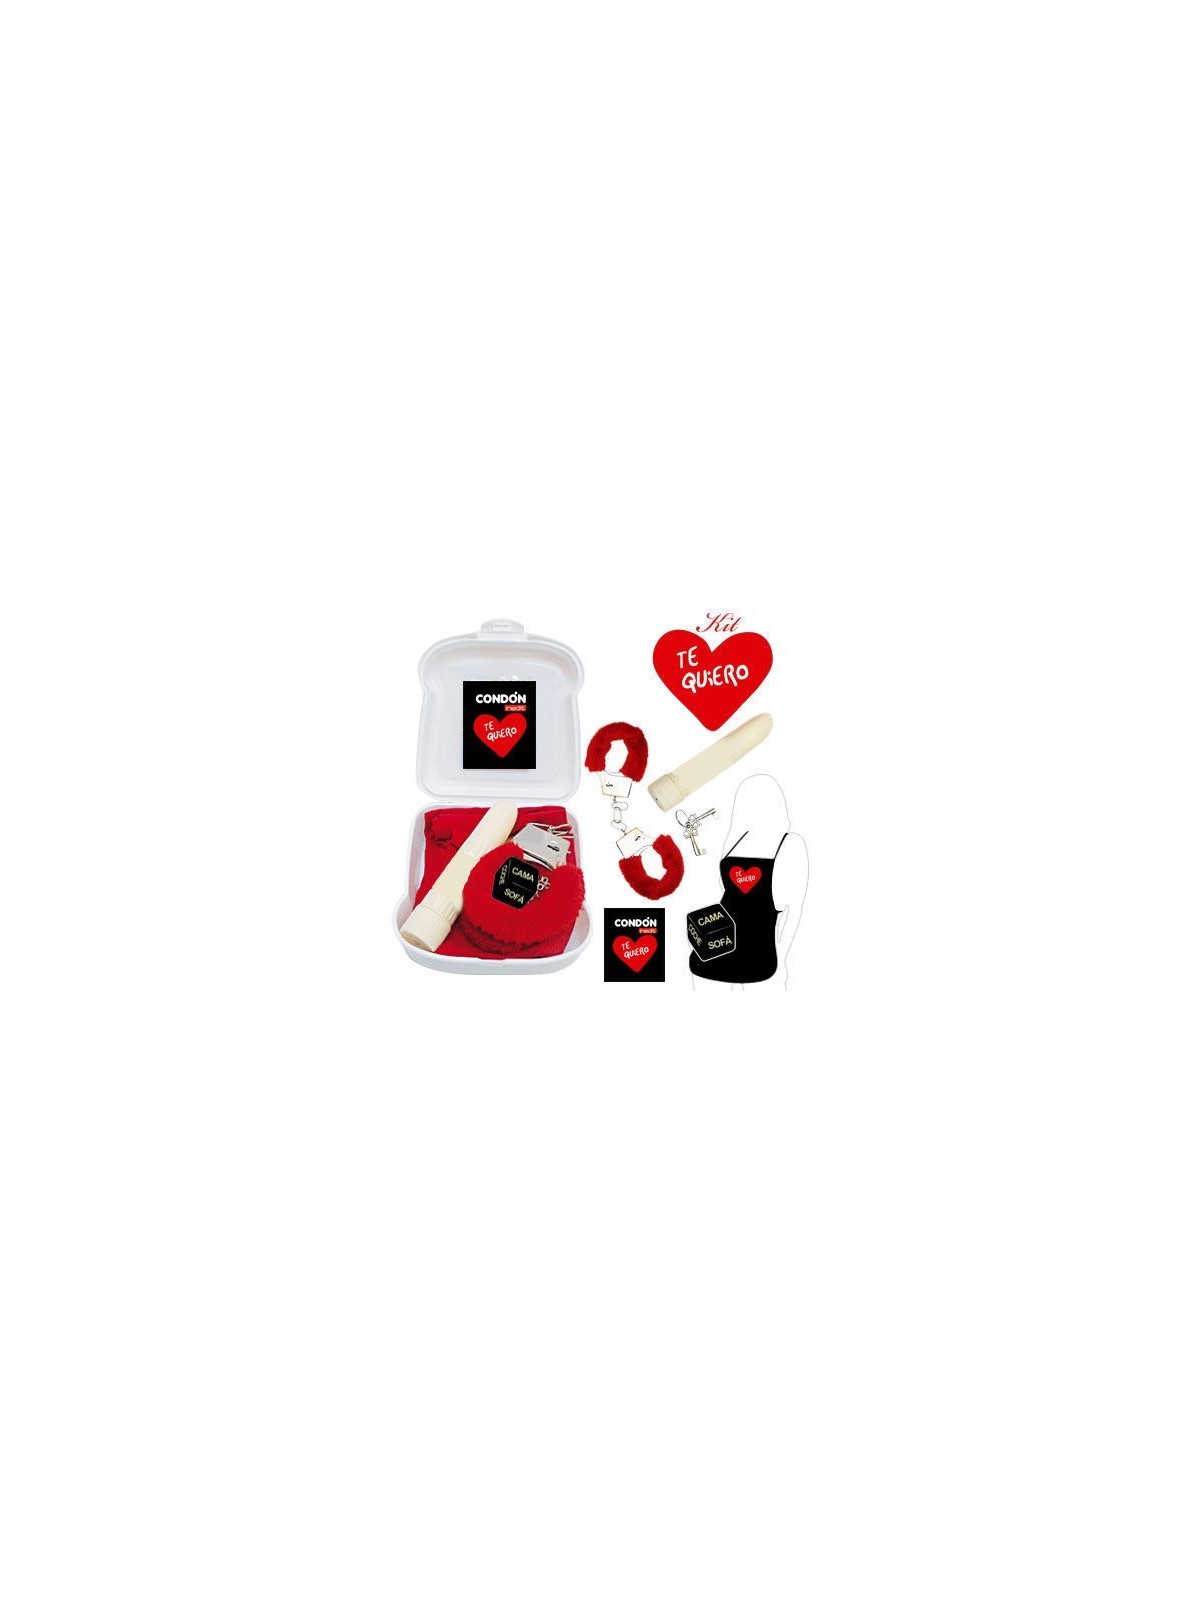 Kit Erótico Rojo Te Quiero I Love You - Comprar Kit erótico pareja Inedit - Packs eróticos (1)